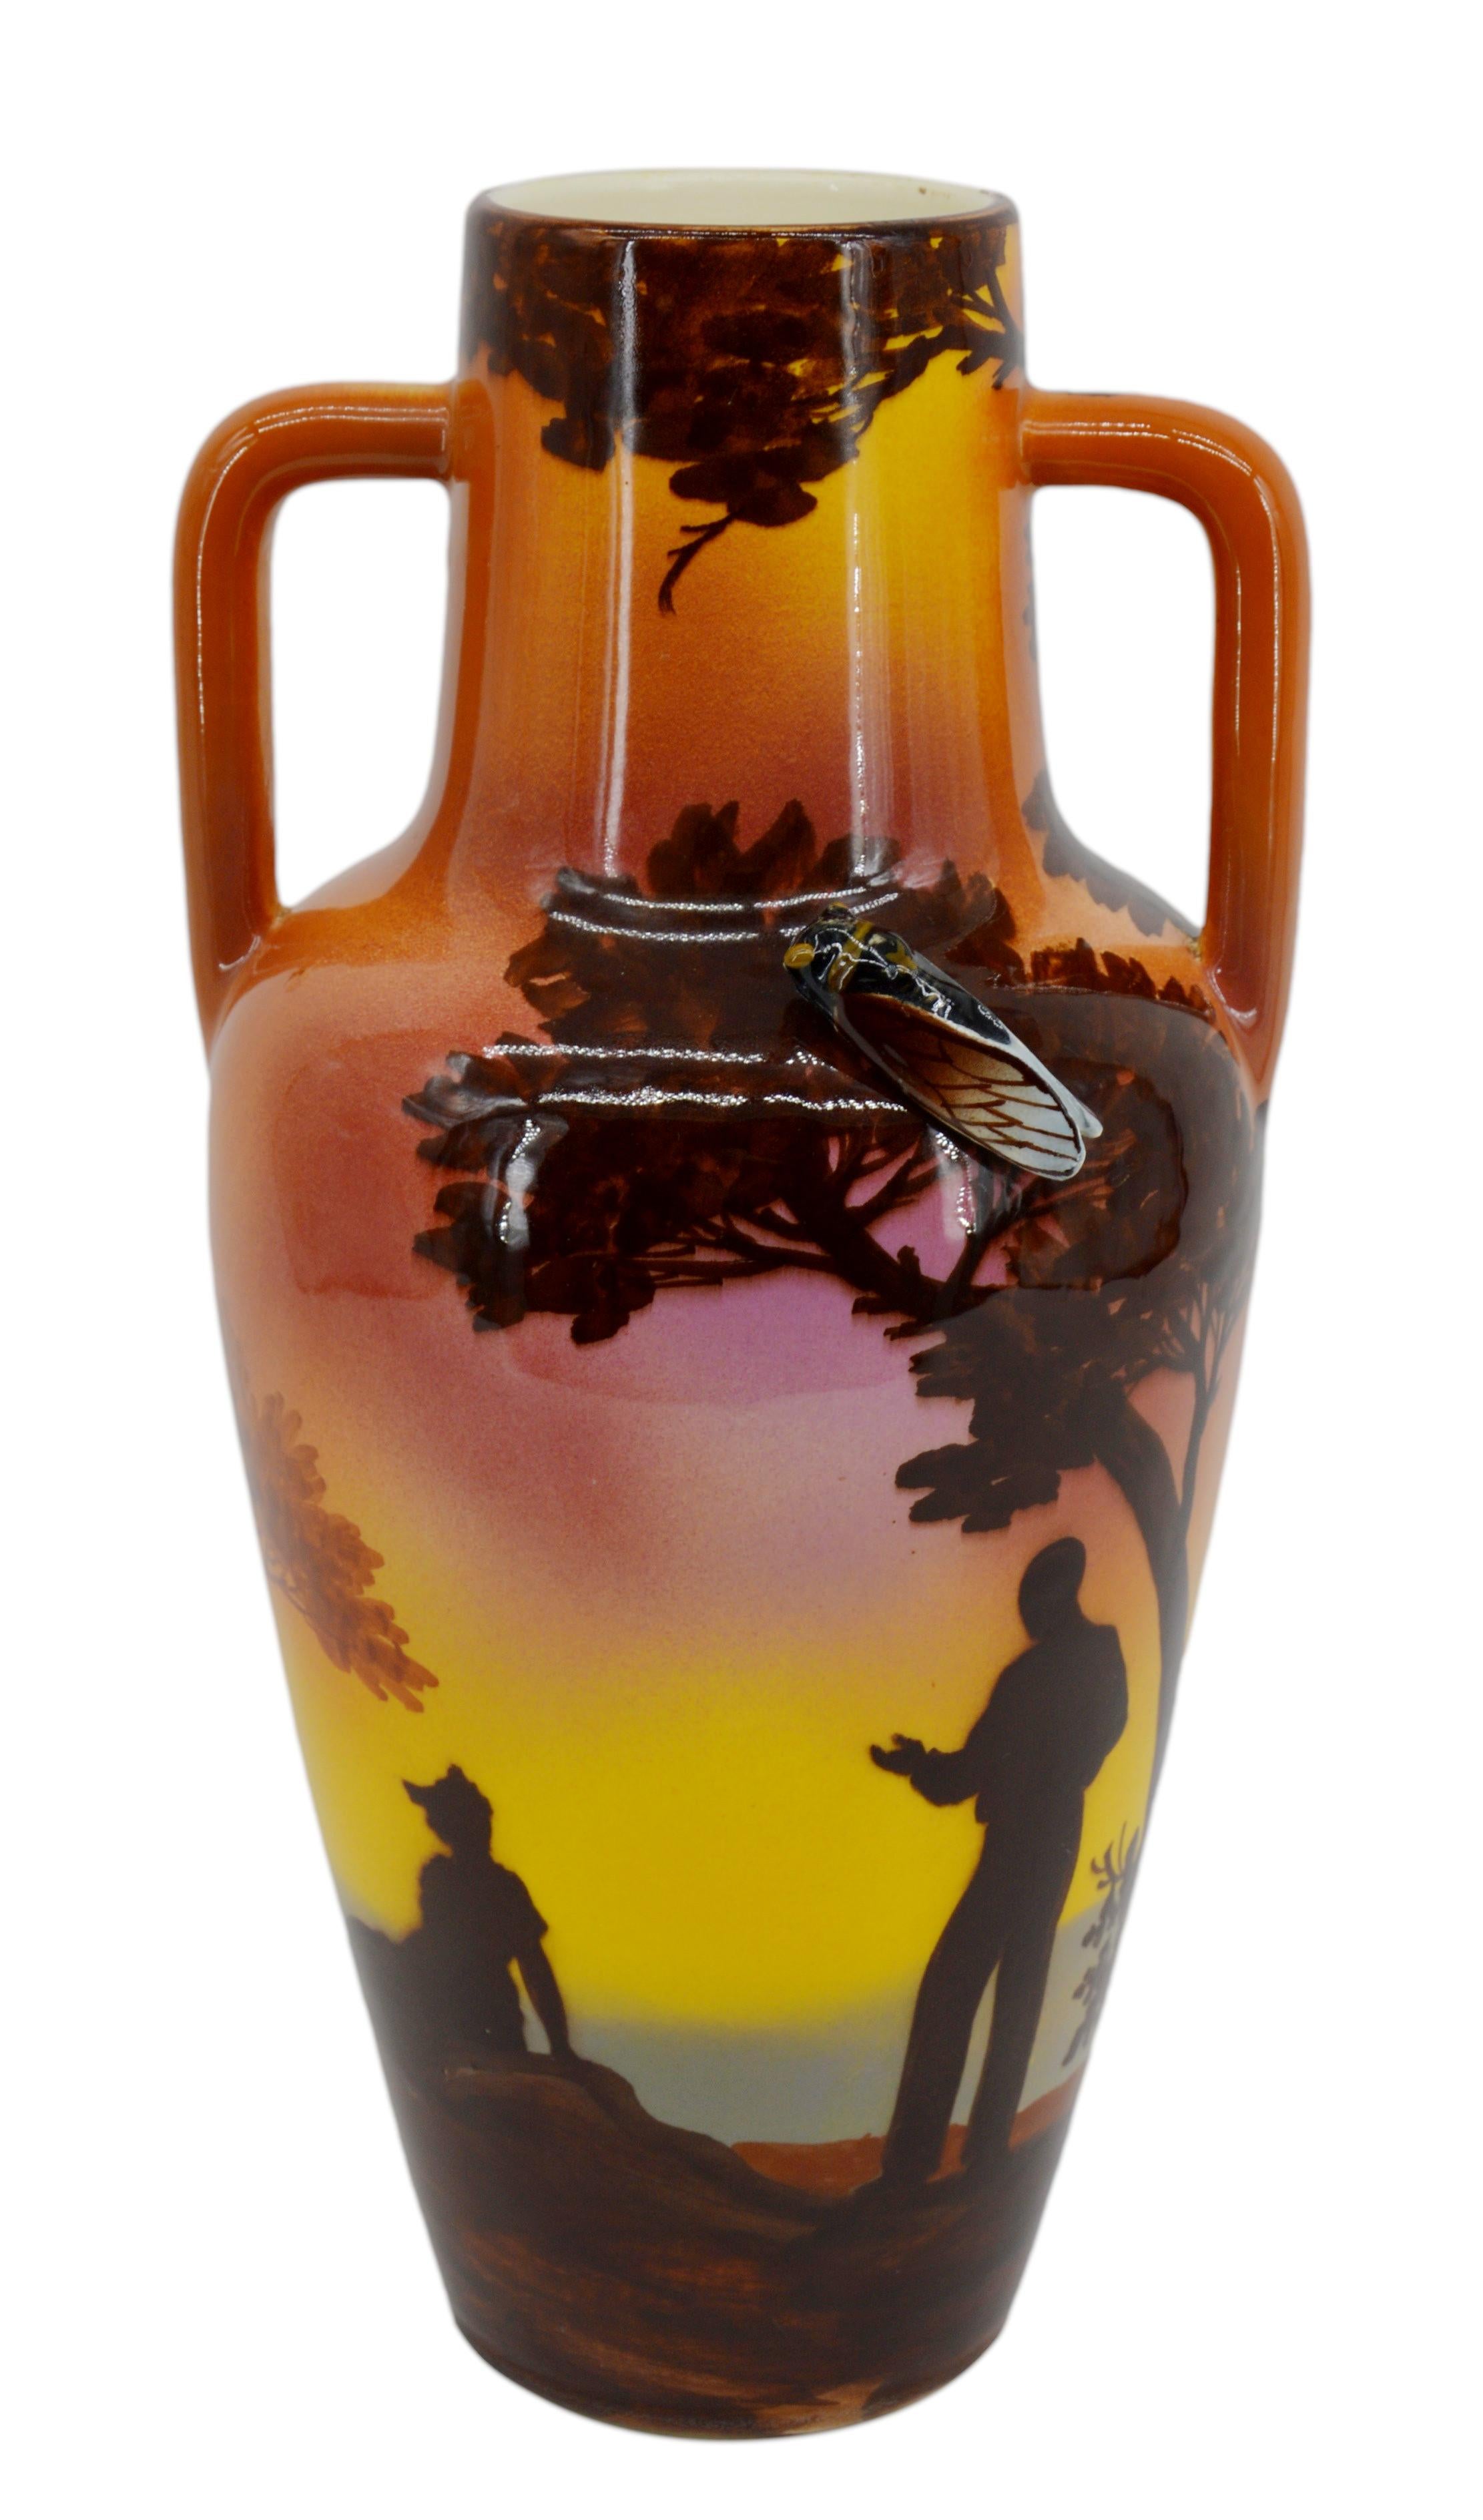 Ceramic  vase by SAINT-JEAN-DU-DESERT (Marseille), France, 1930s. Baluster vase with 2 handles decorated with Vincent & Mireille pattern (novel by Frédéric Mistral). Height : 35cm (13.8